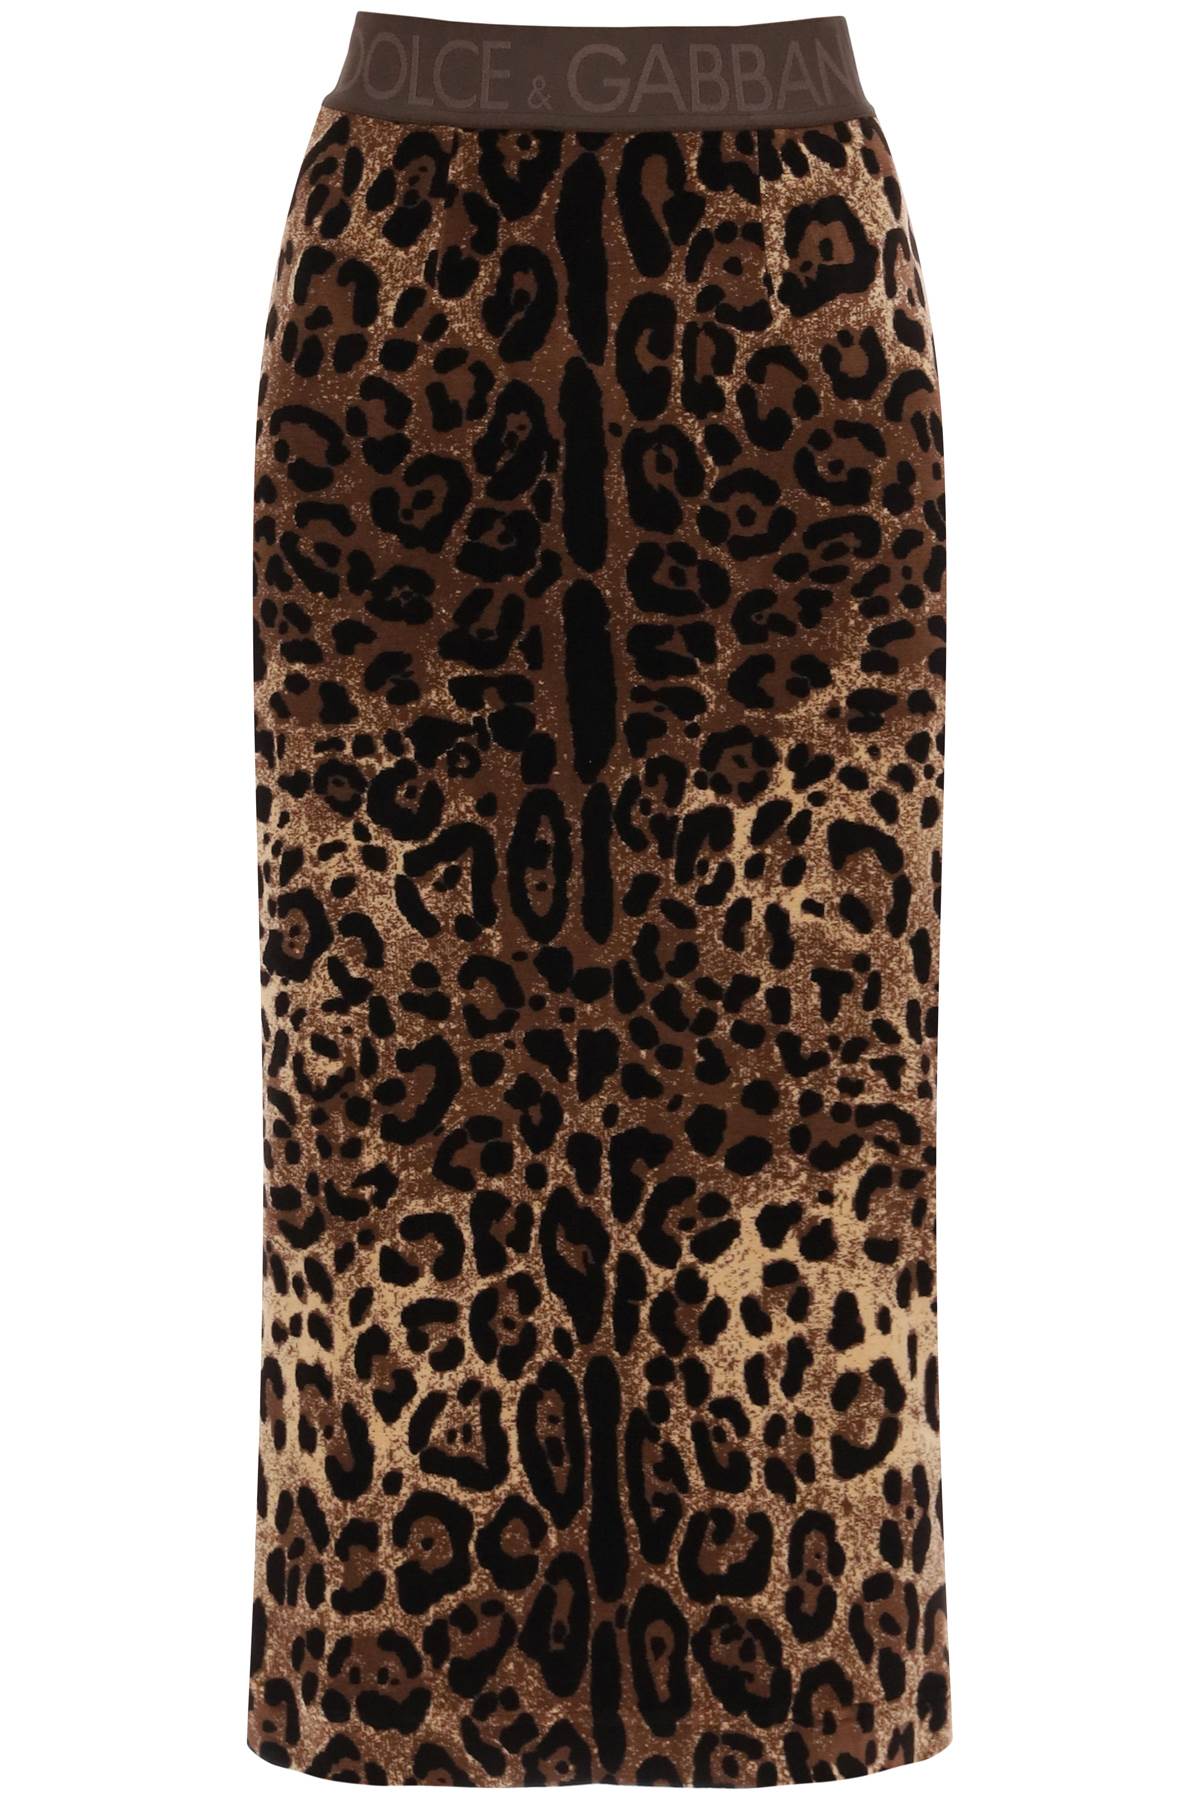 Dolce & Gabbana Leopard Chenille Pencil Skirt